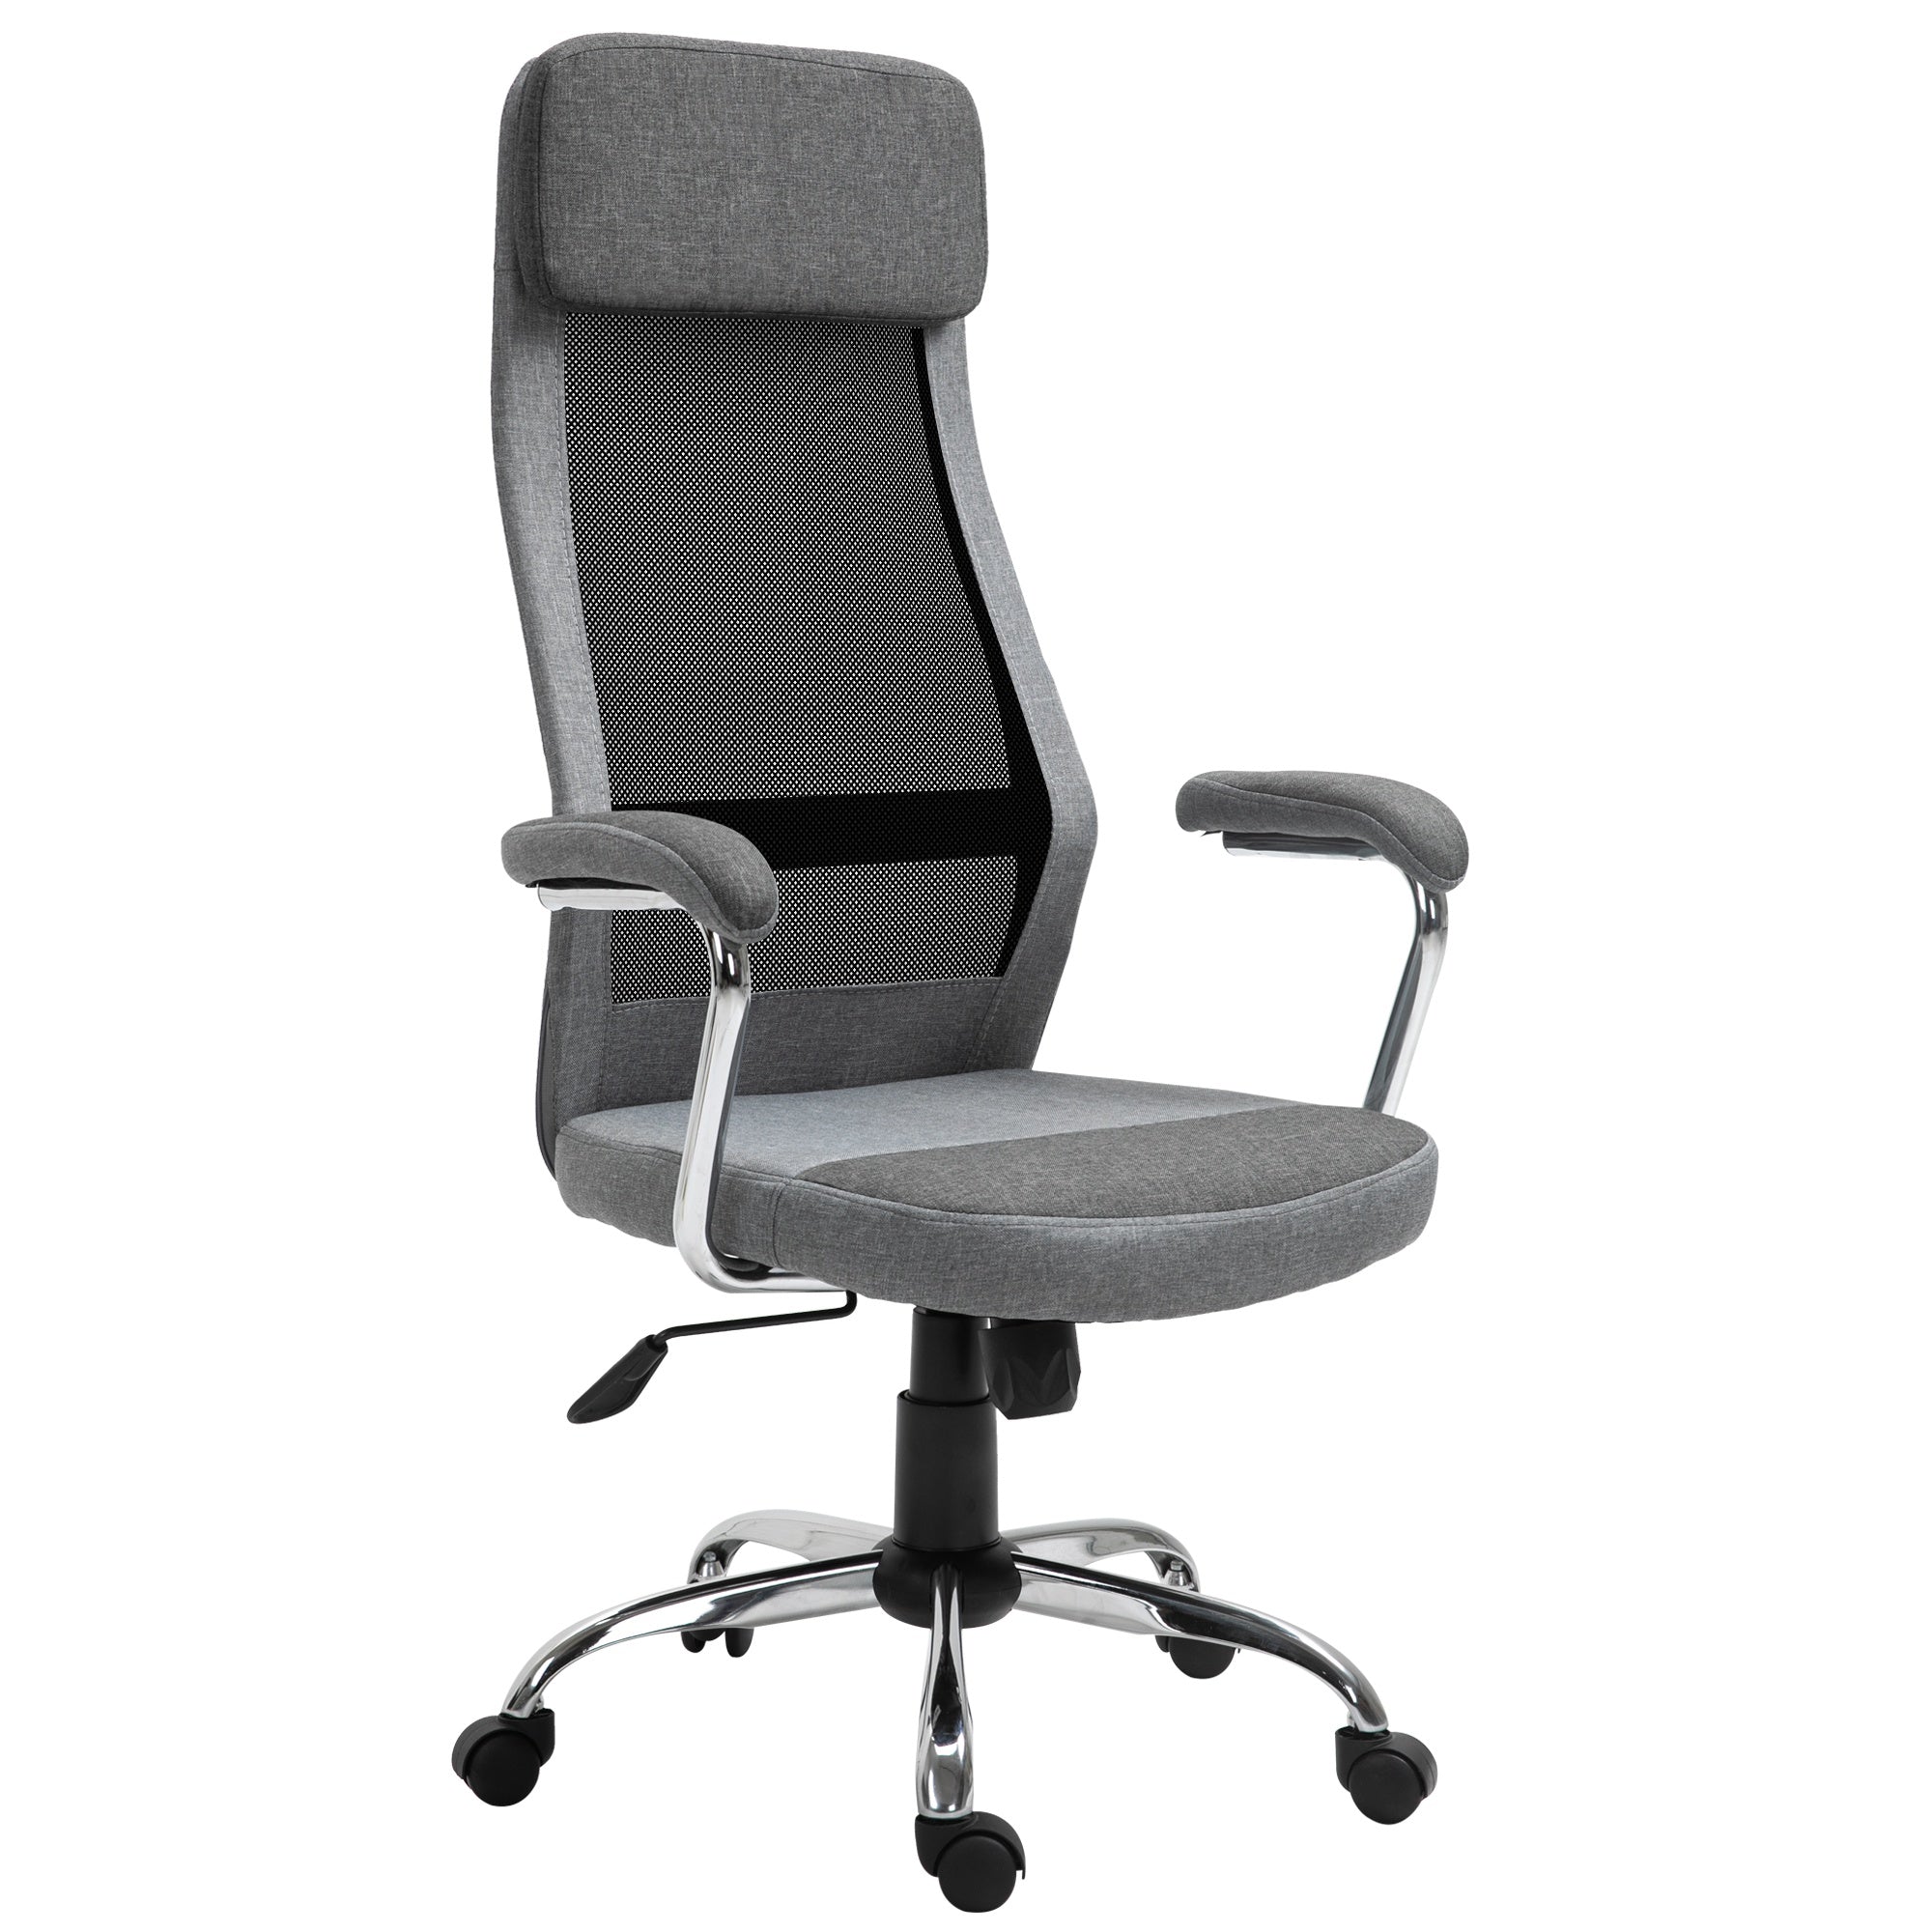 ProperAV Linen-Feel Mesh Fabric High Back Swivel Office Chair - Grey